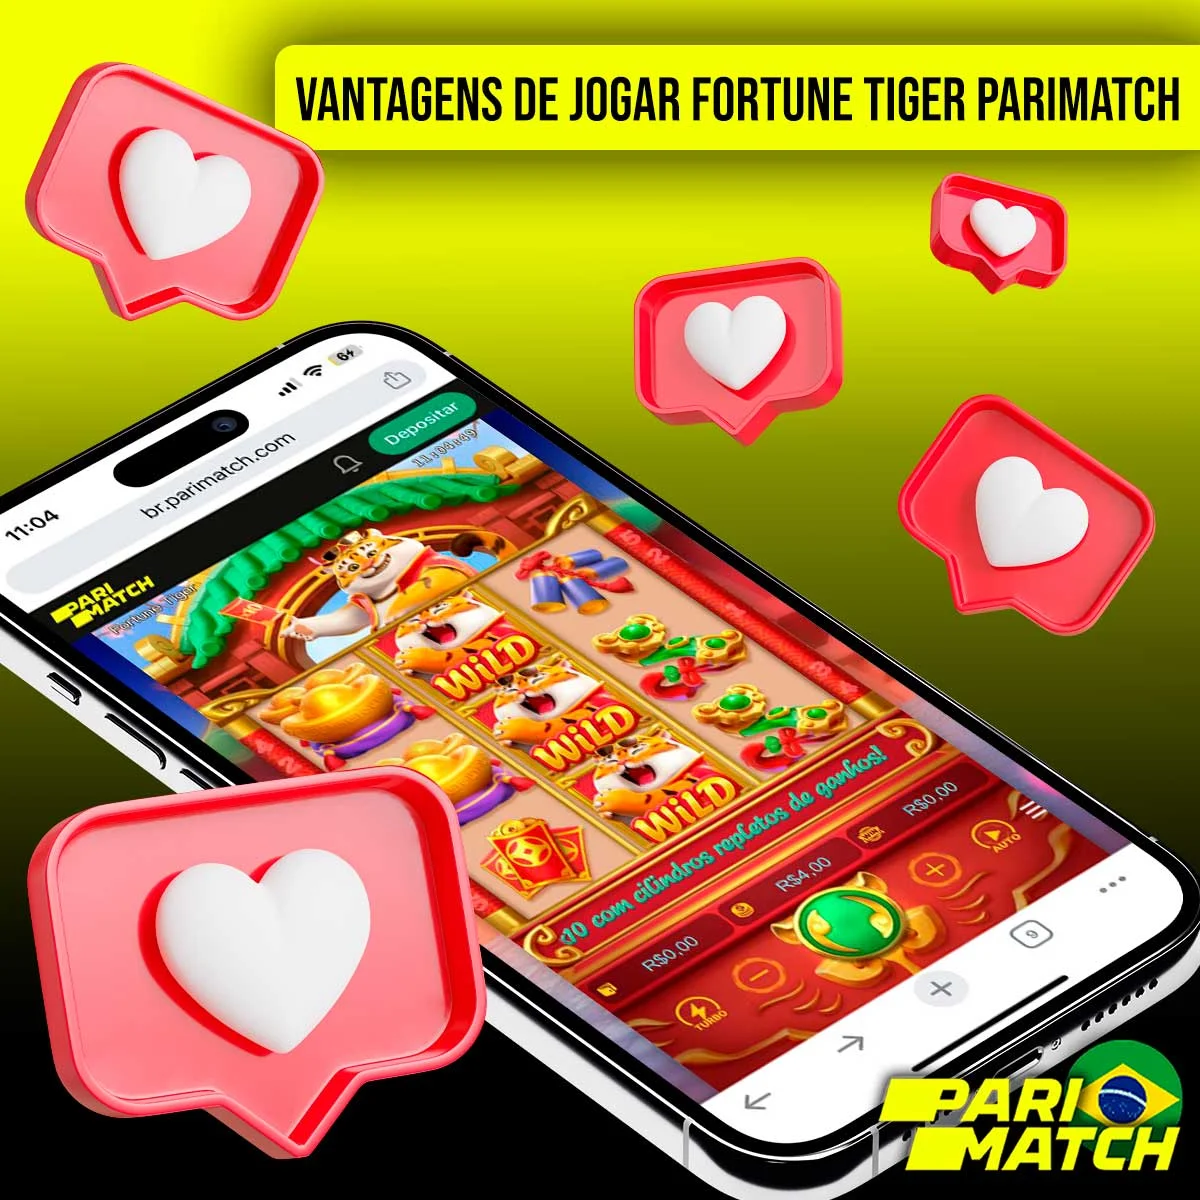 Vantagens de jogar na plataforma Parimatch Fortune Tiger